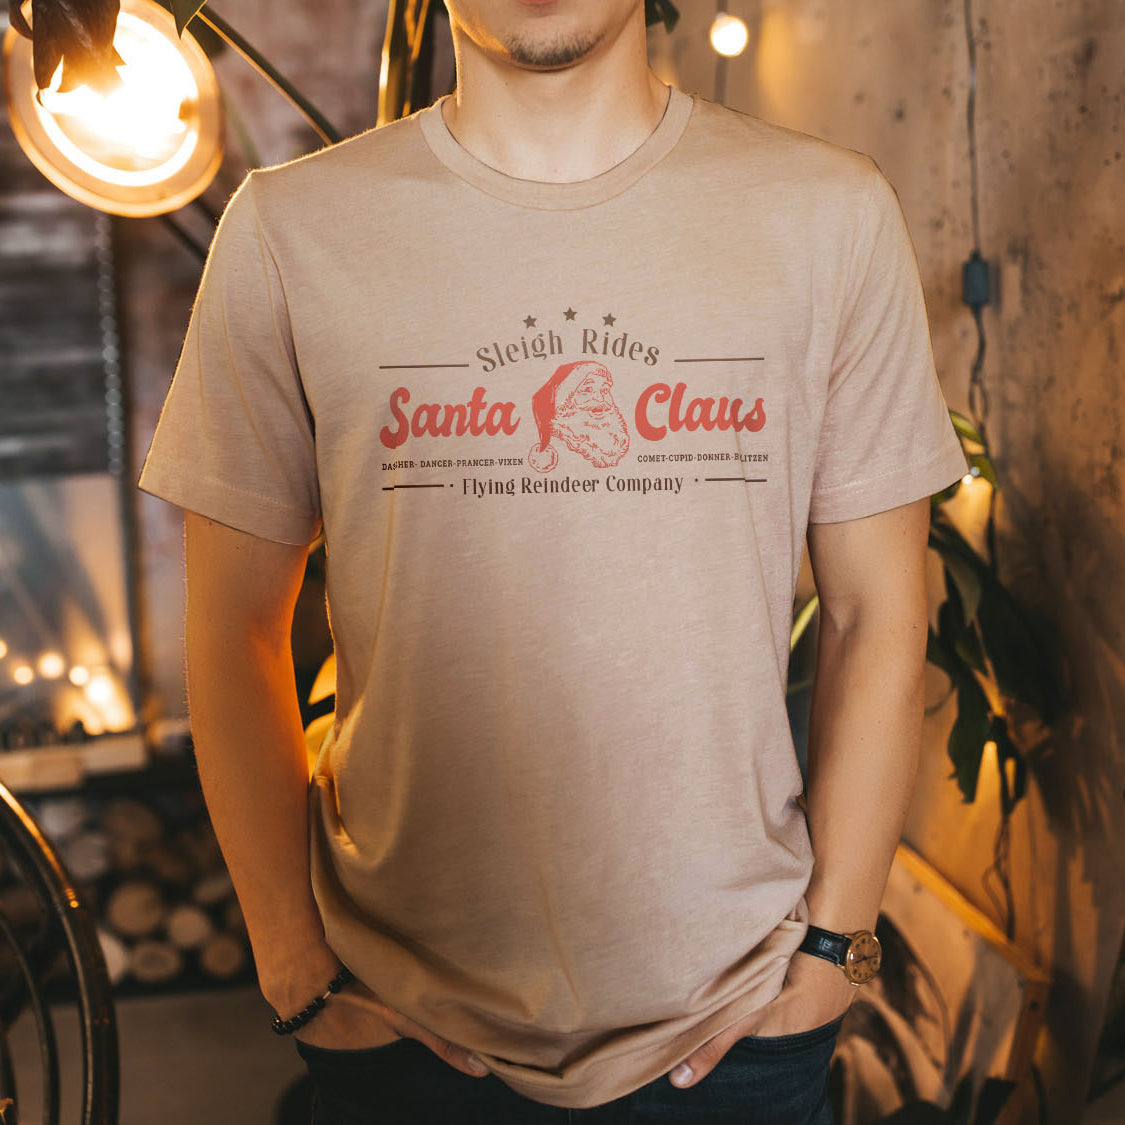 Sleigh Rides Santa Claus Flying Reindeer Company T-shirt - Christmas Winter Retro Vintage Design Printed Tee Shirt